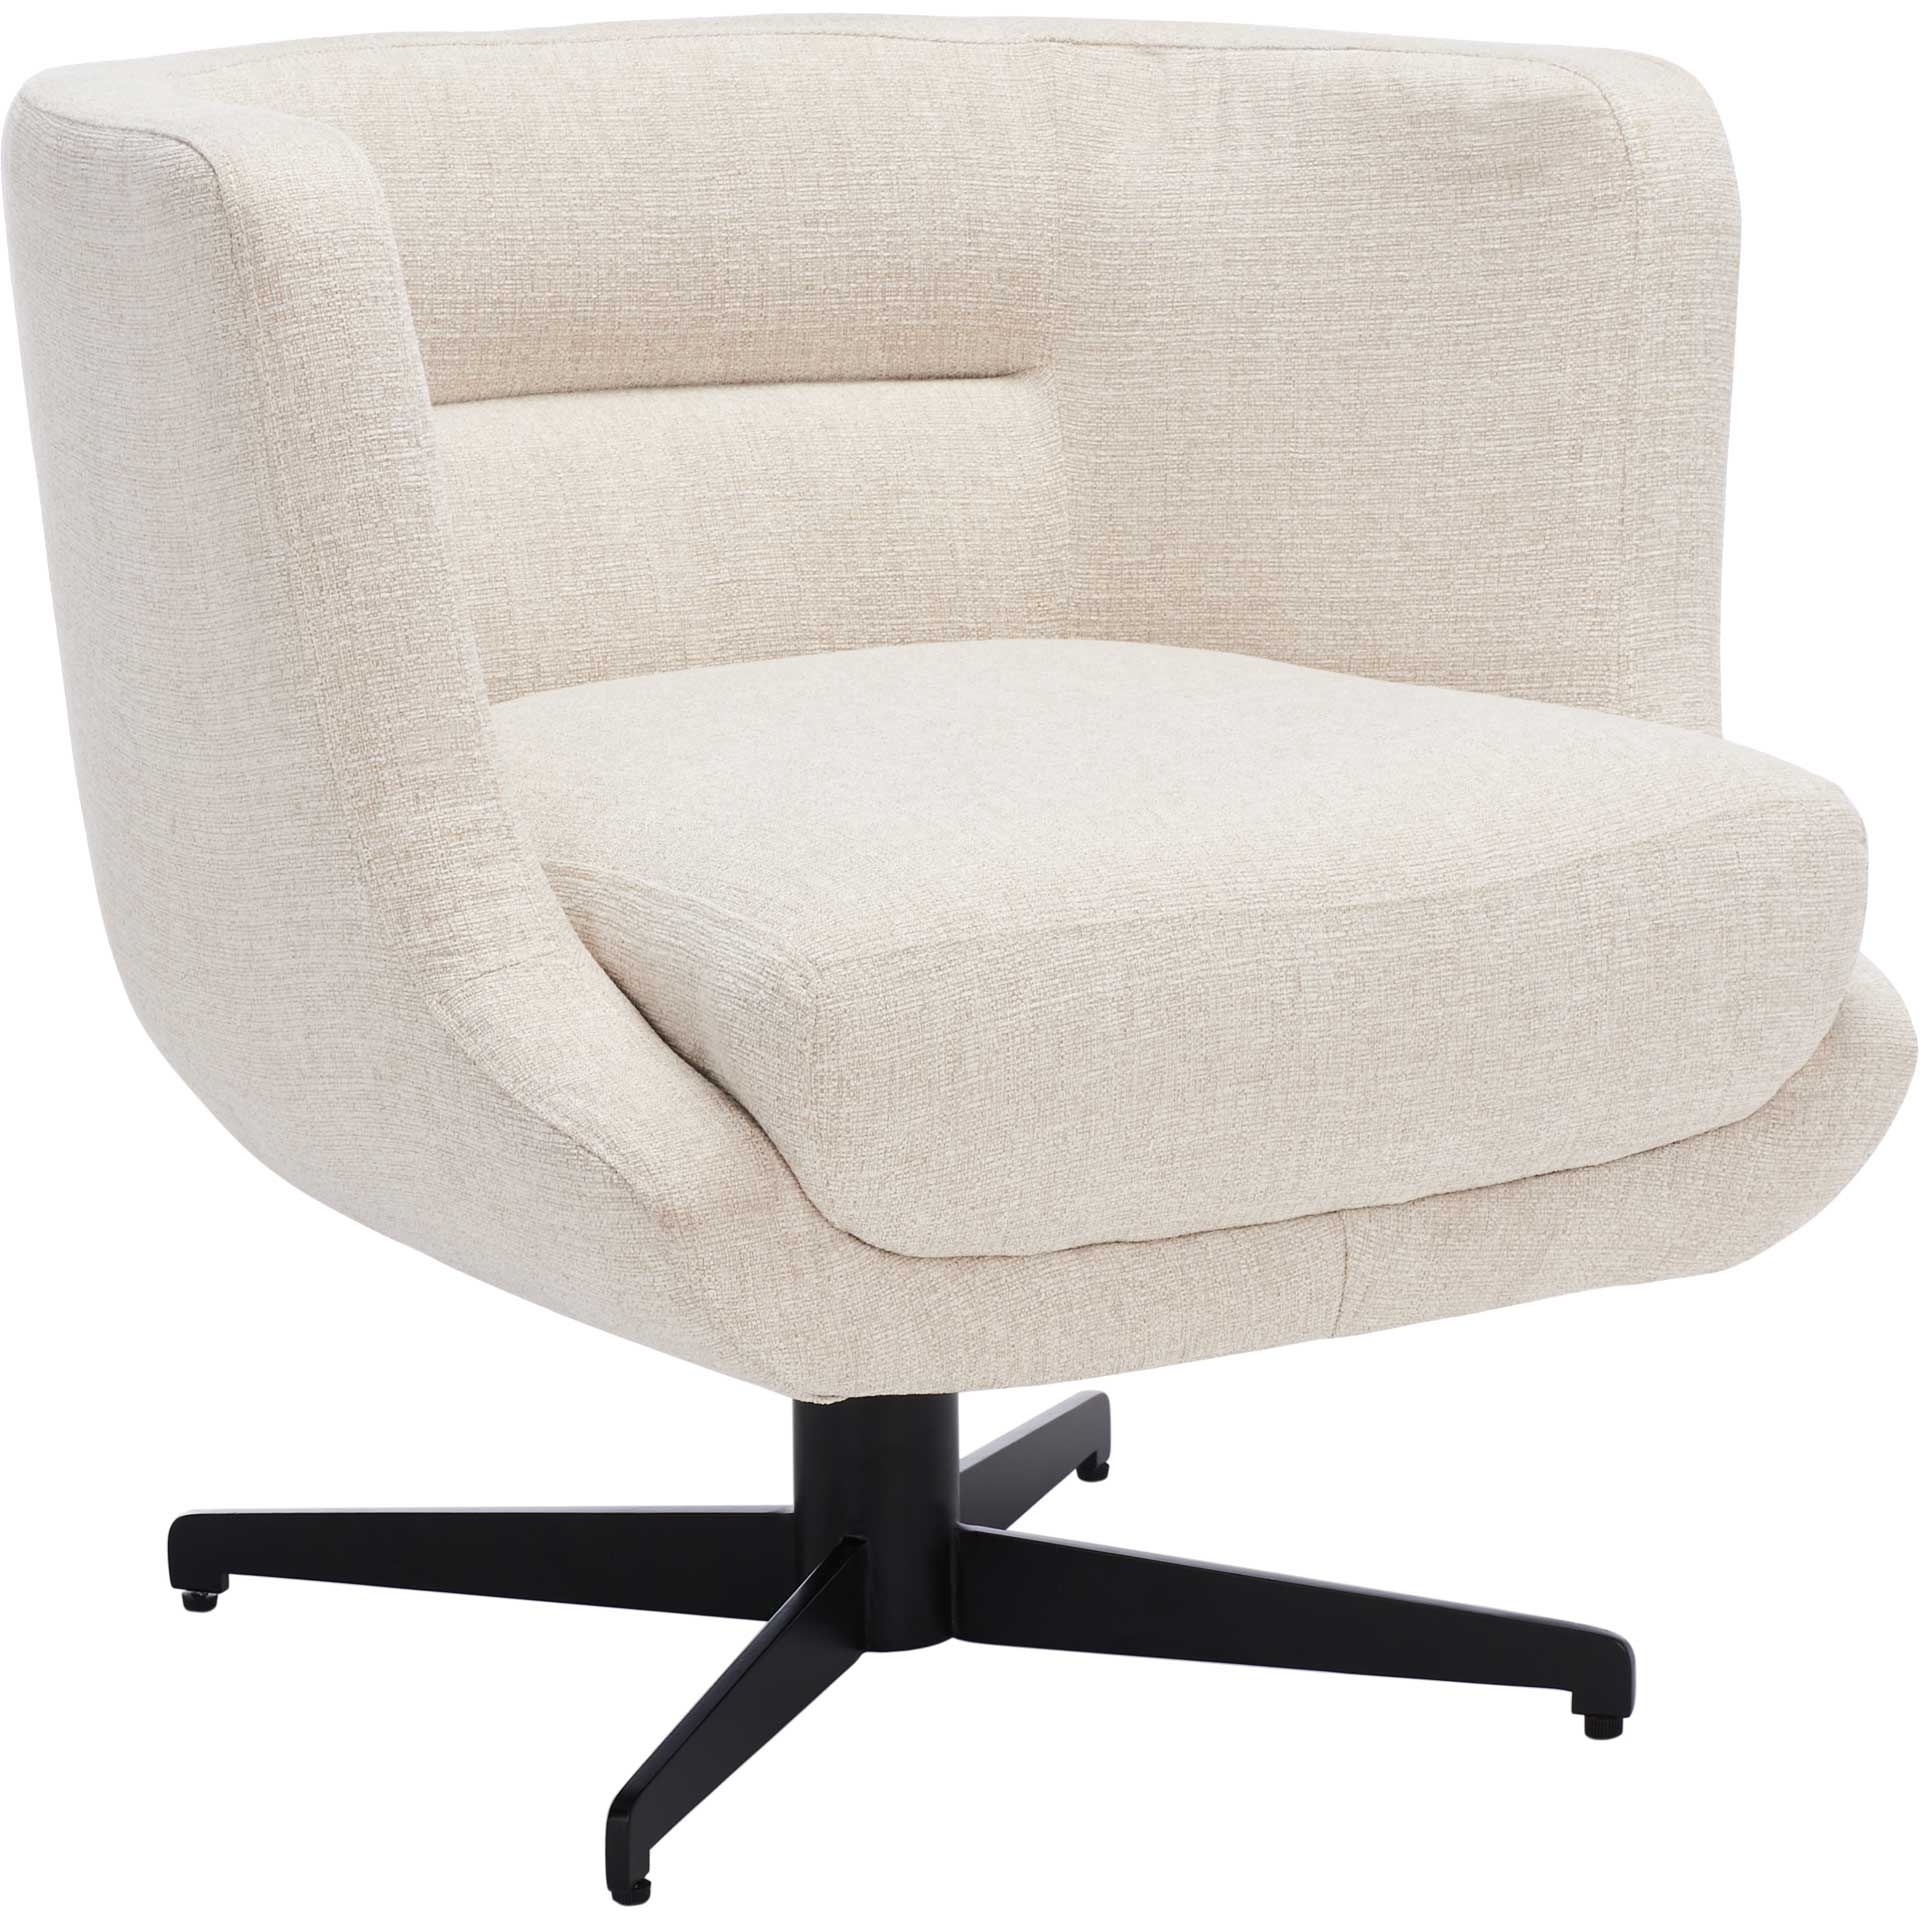 Welson Accent Chair Cream/Black